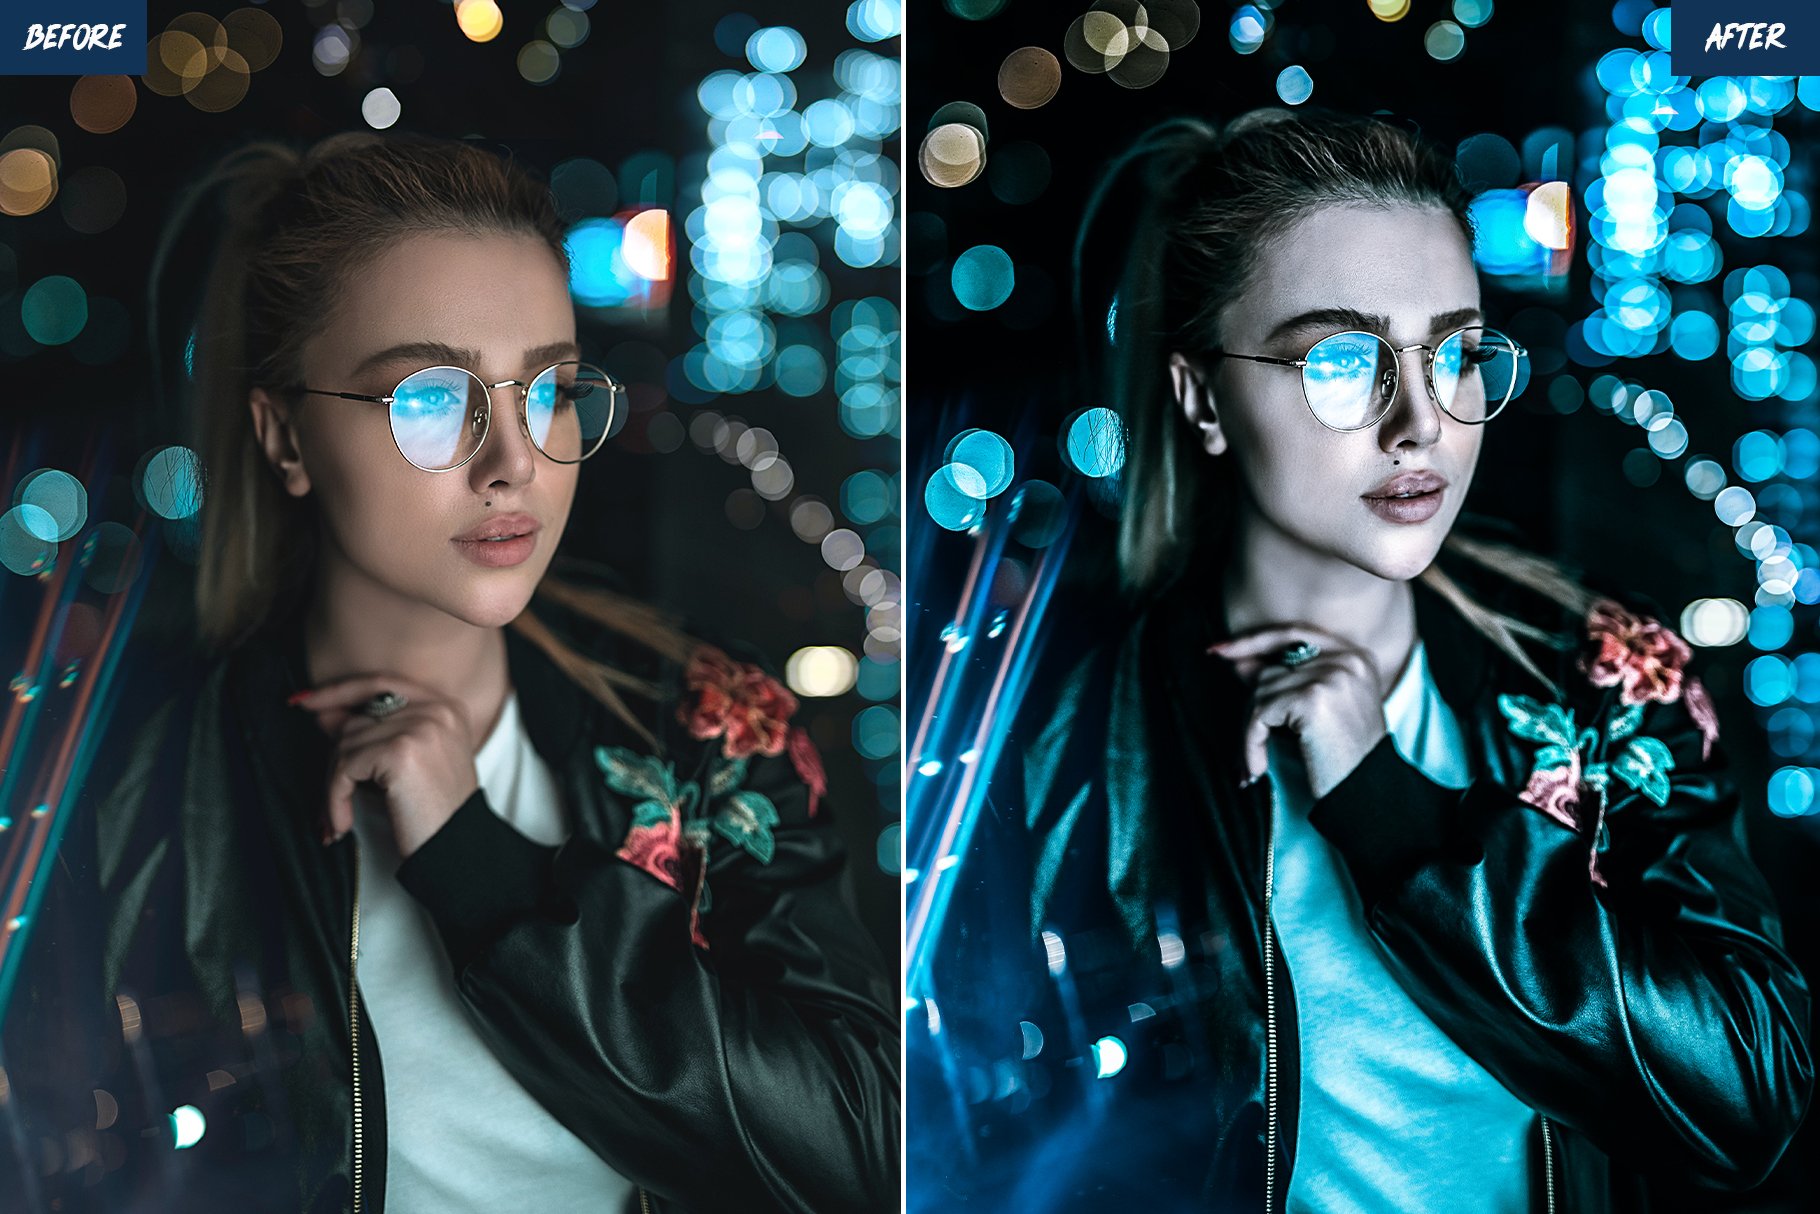 urban cinematic portrait lightroom presets for mobile and desktop before and after 13 312